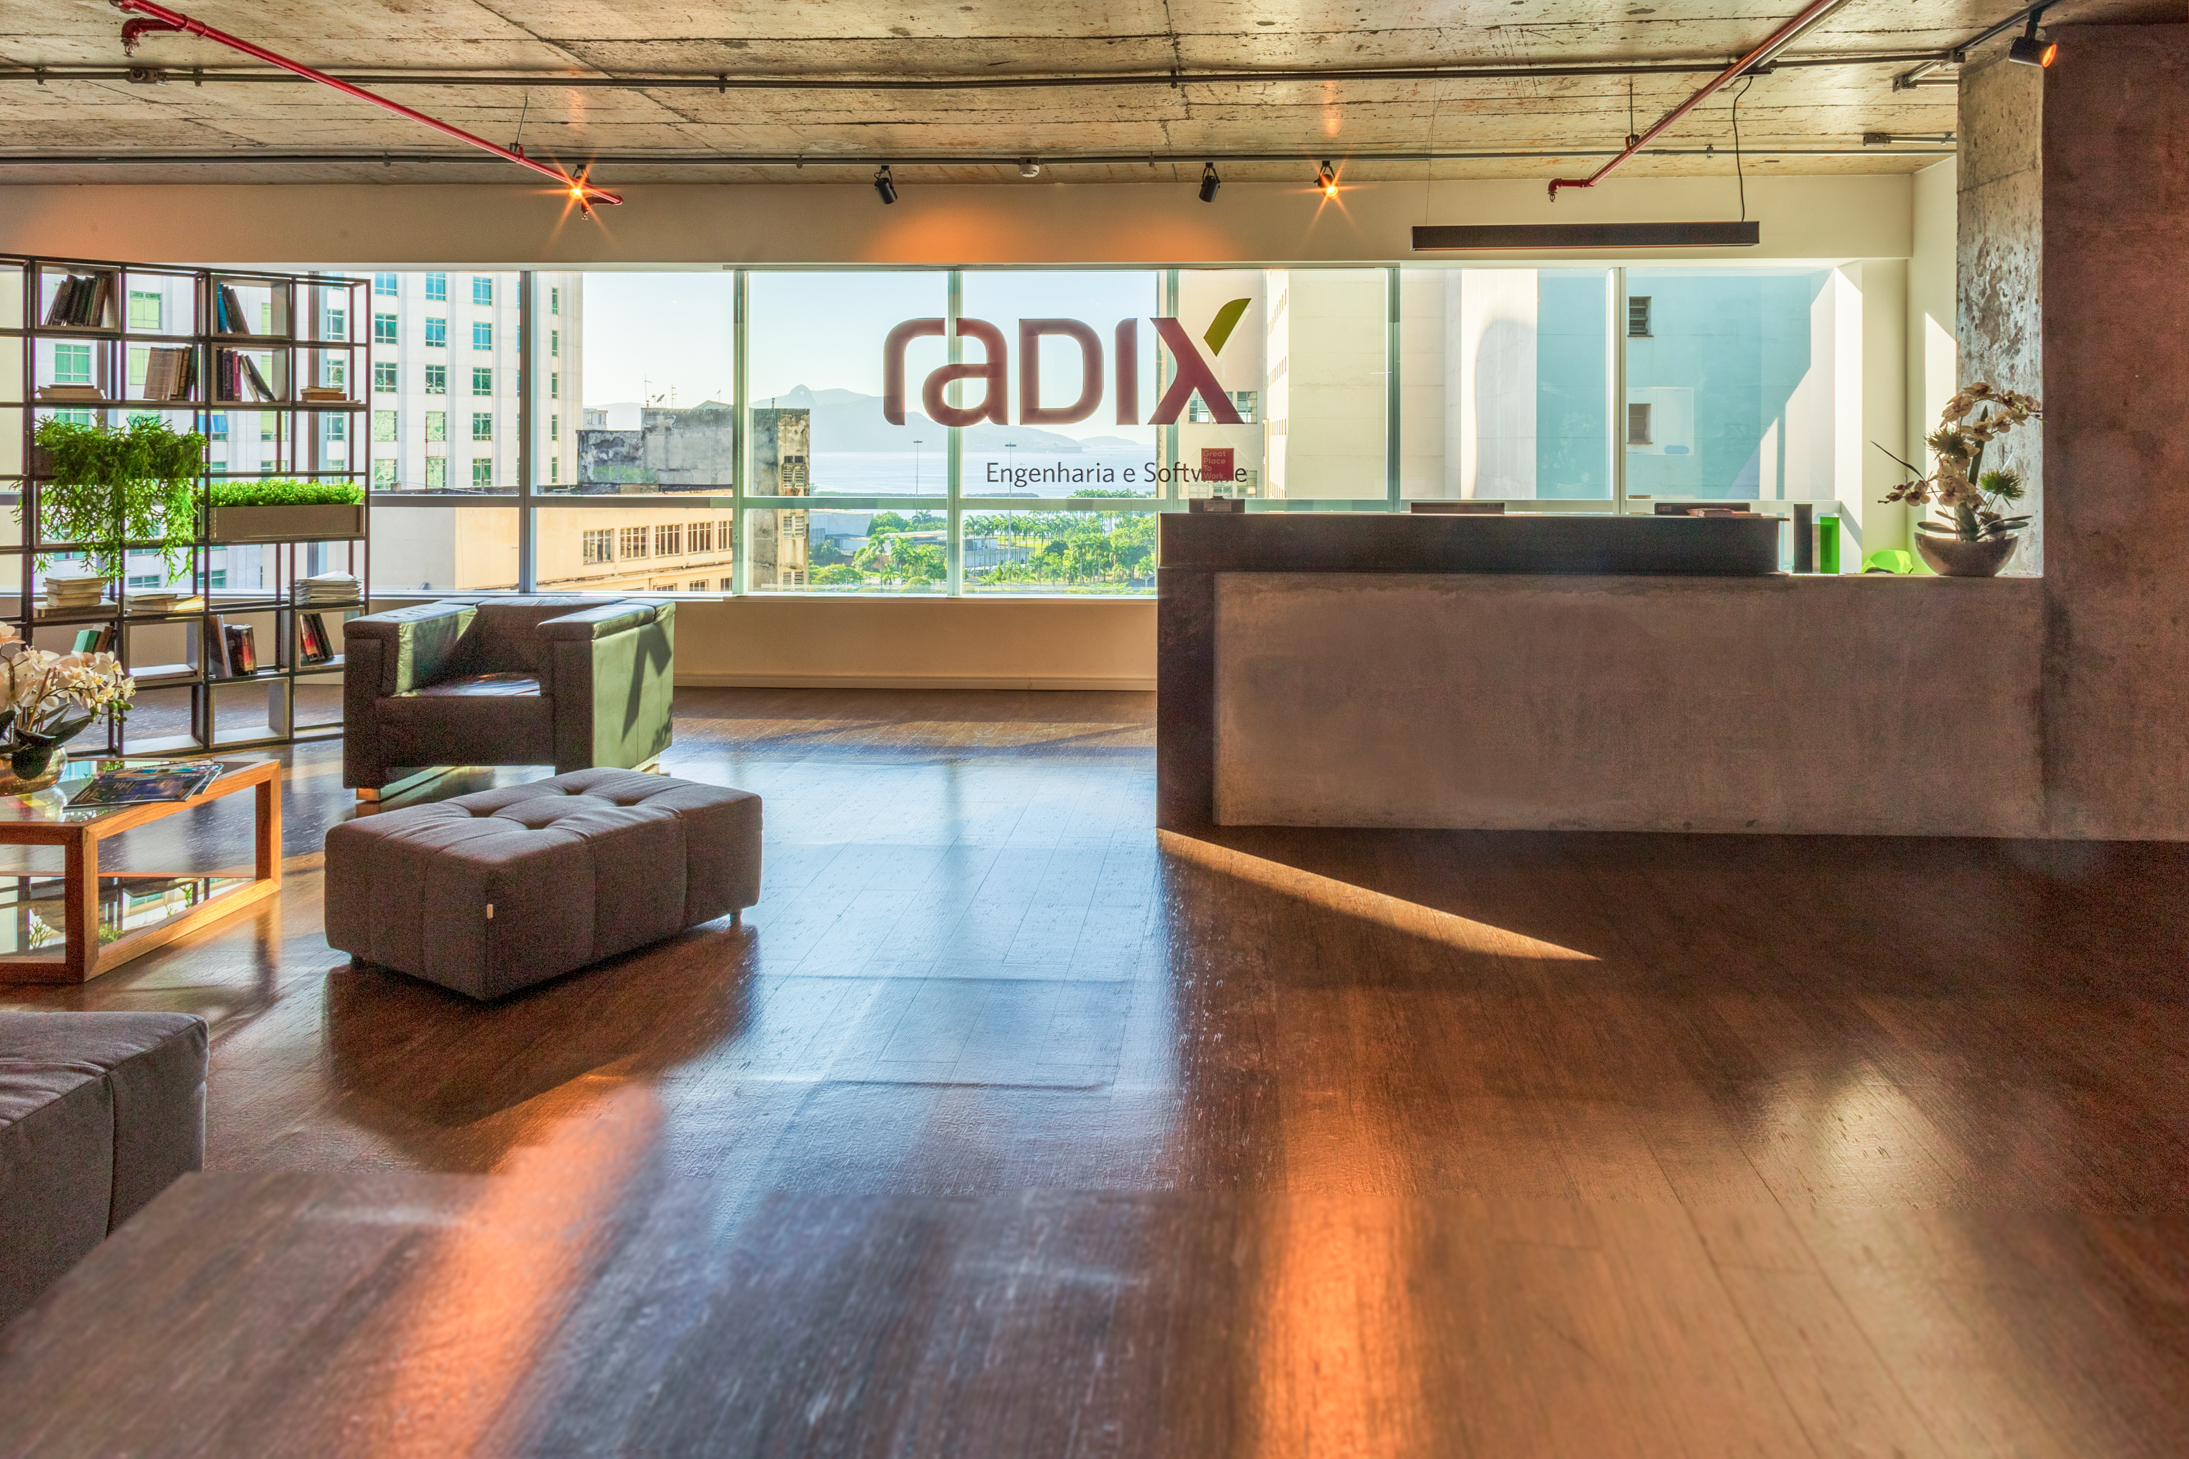 Empregos de TI: Radix abre vagas para profissionais de tecnologia